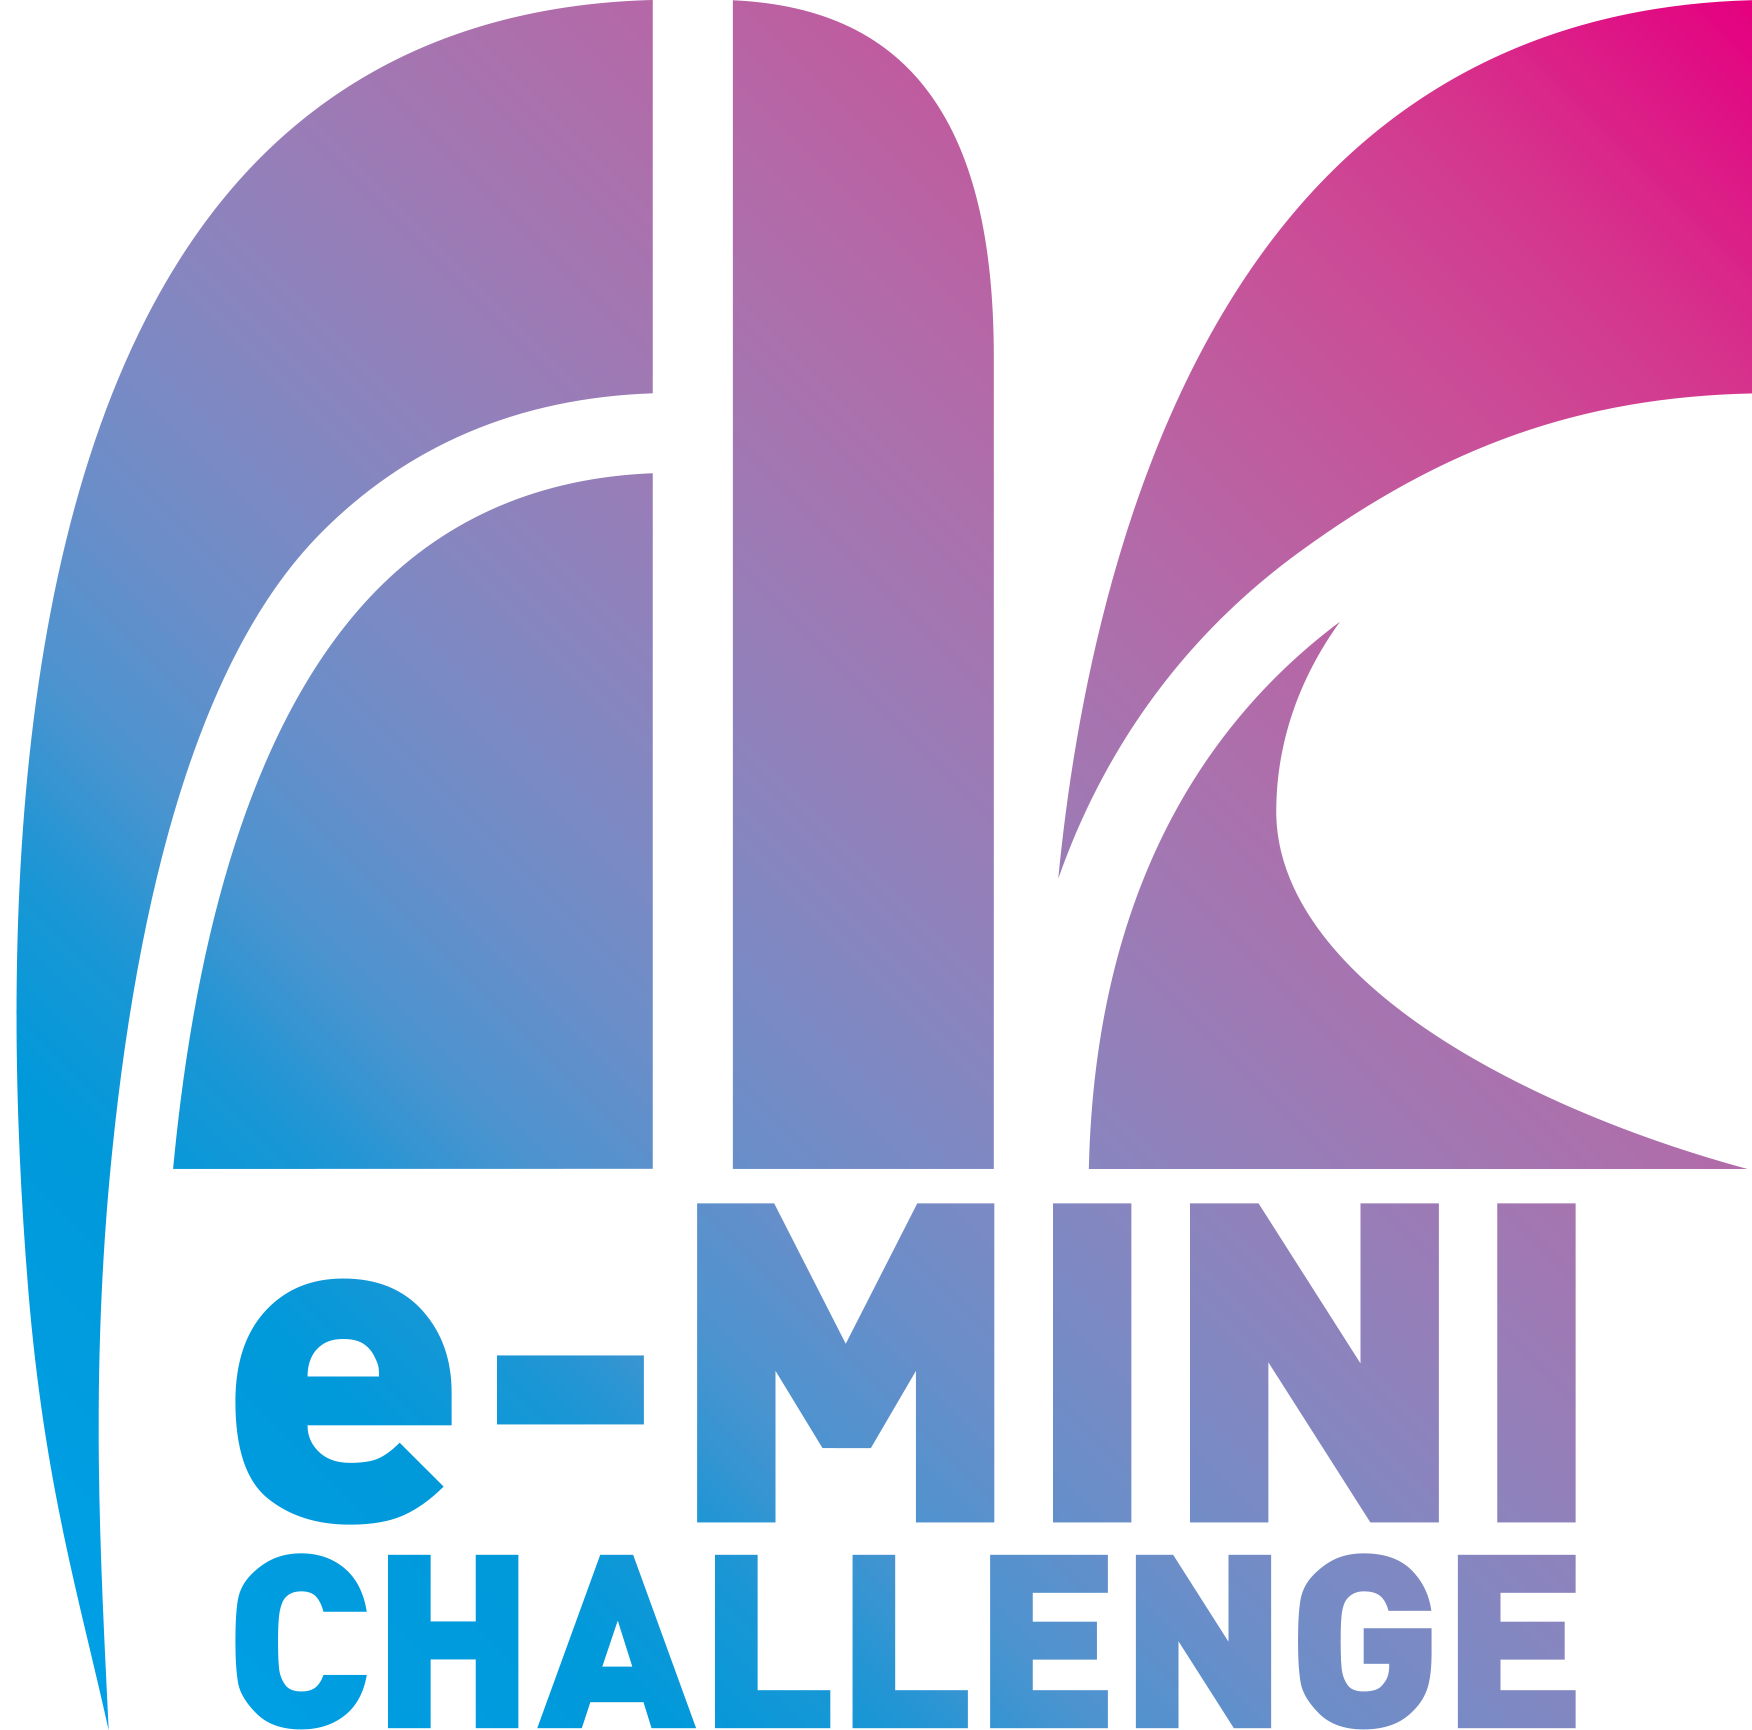 e-MINI CHALLENGE®2022 S1 Rd.3 A/B ポイントランキング公開